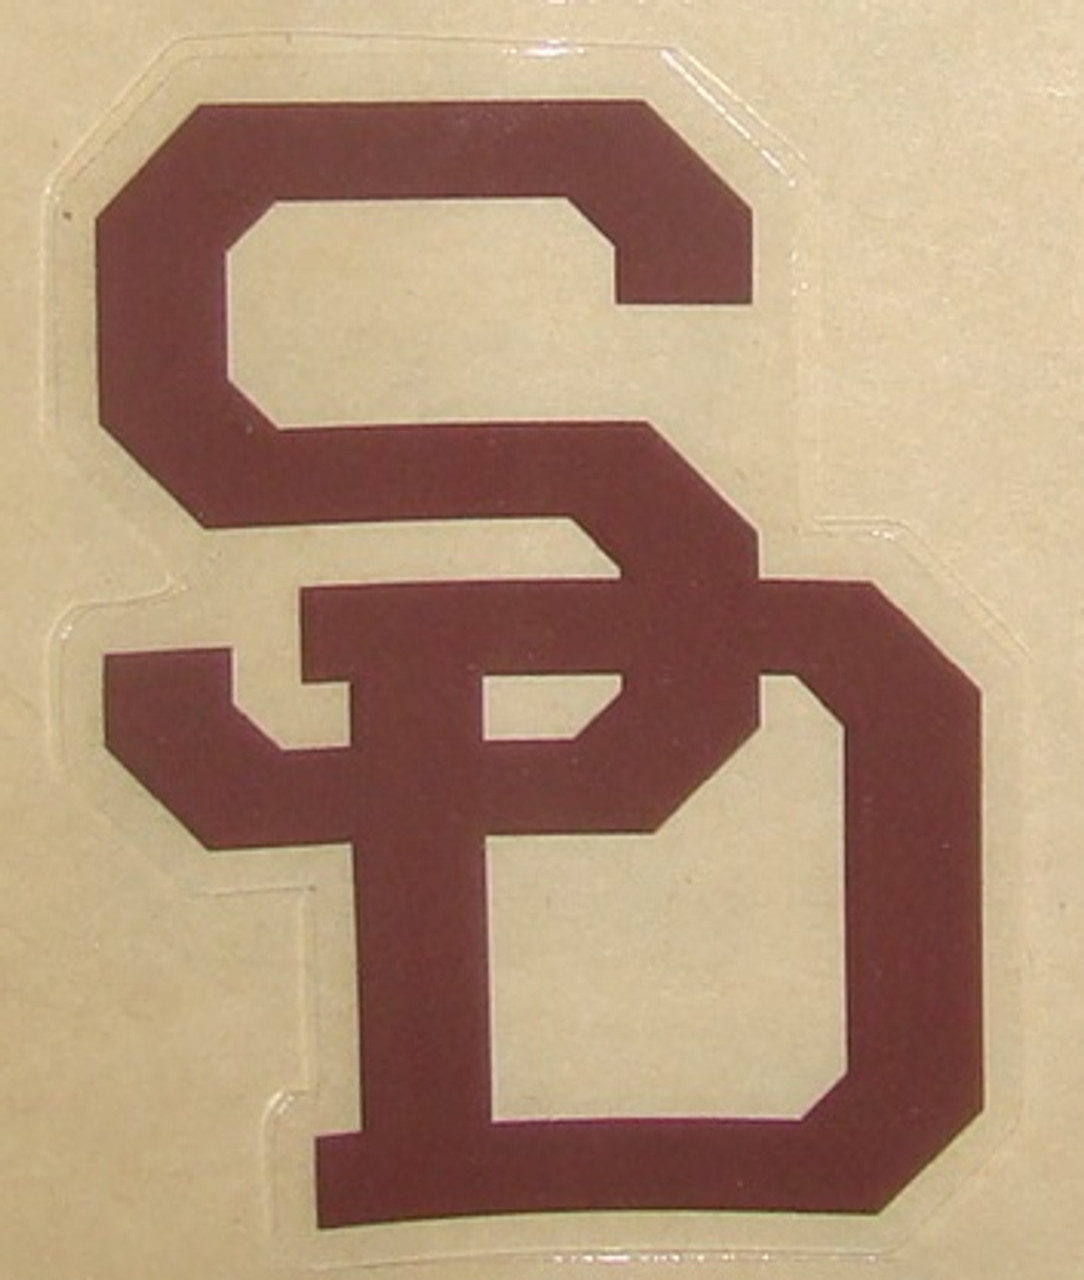 San Diego Padres SD Emblem Sleeve Patch